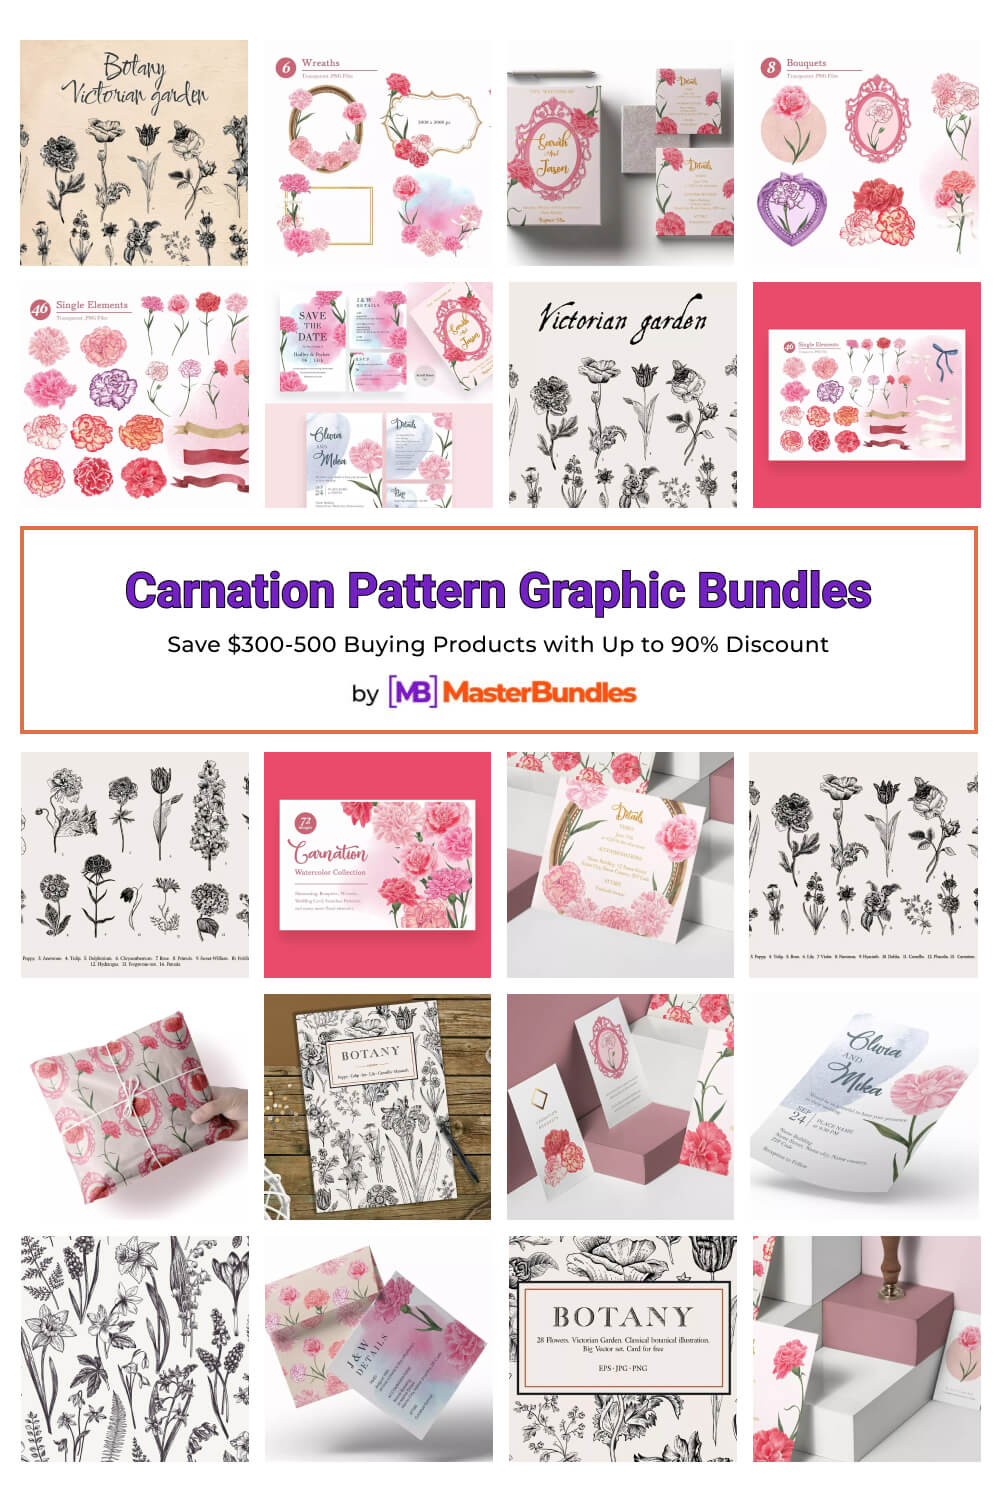 carnation pattern graphic bundles pinterest image.